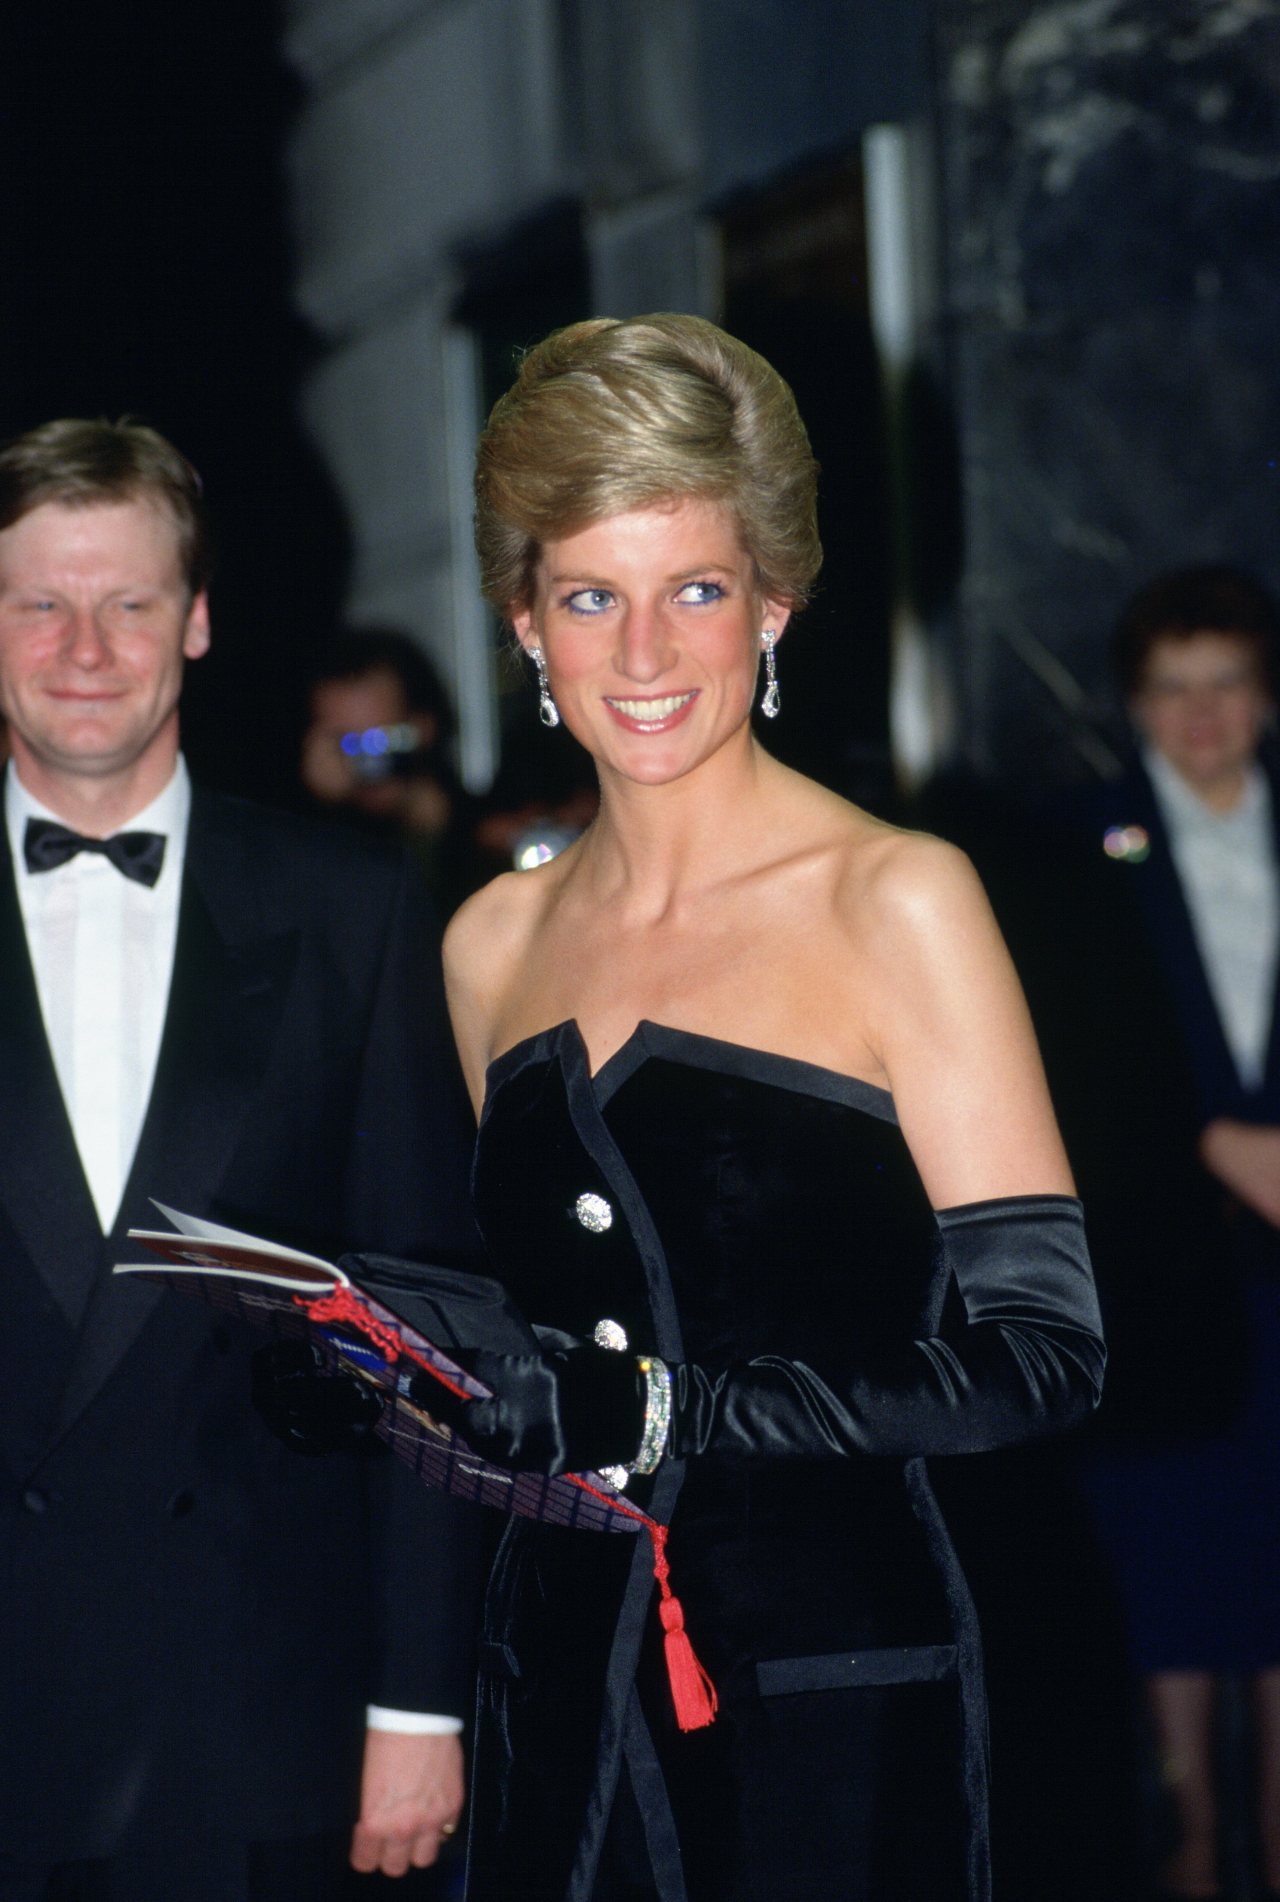 Celebrities in Gloves — Princess Diana wearing satin opera gloves.